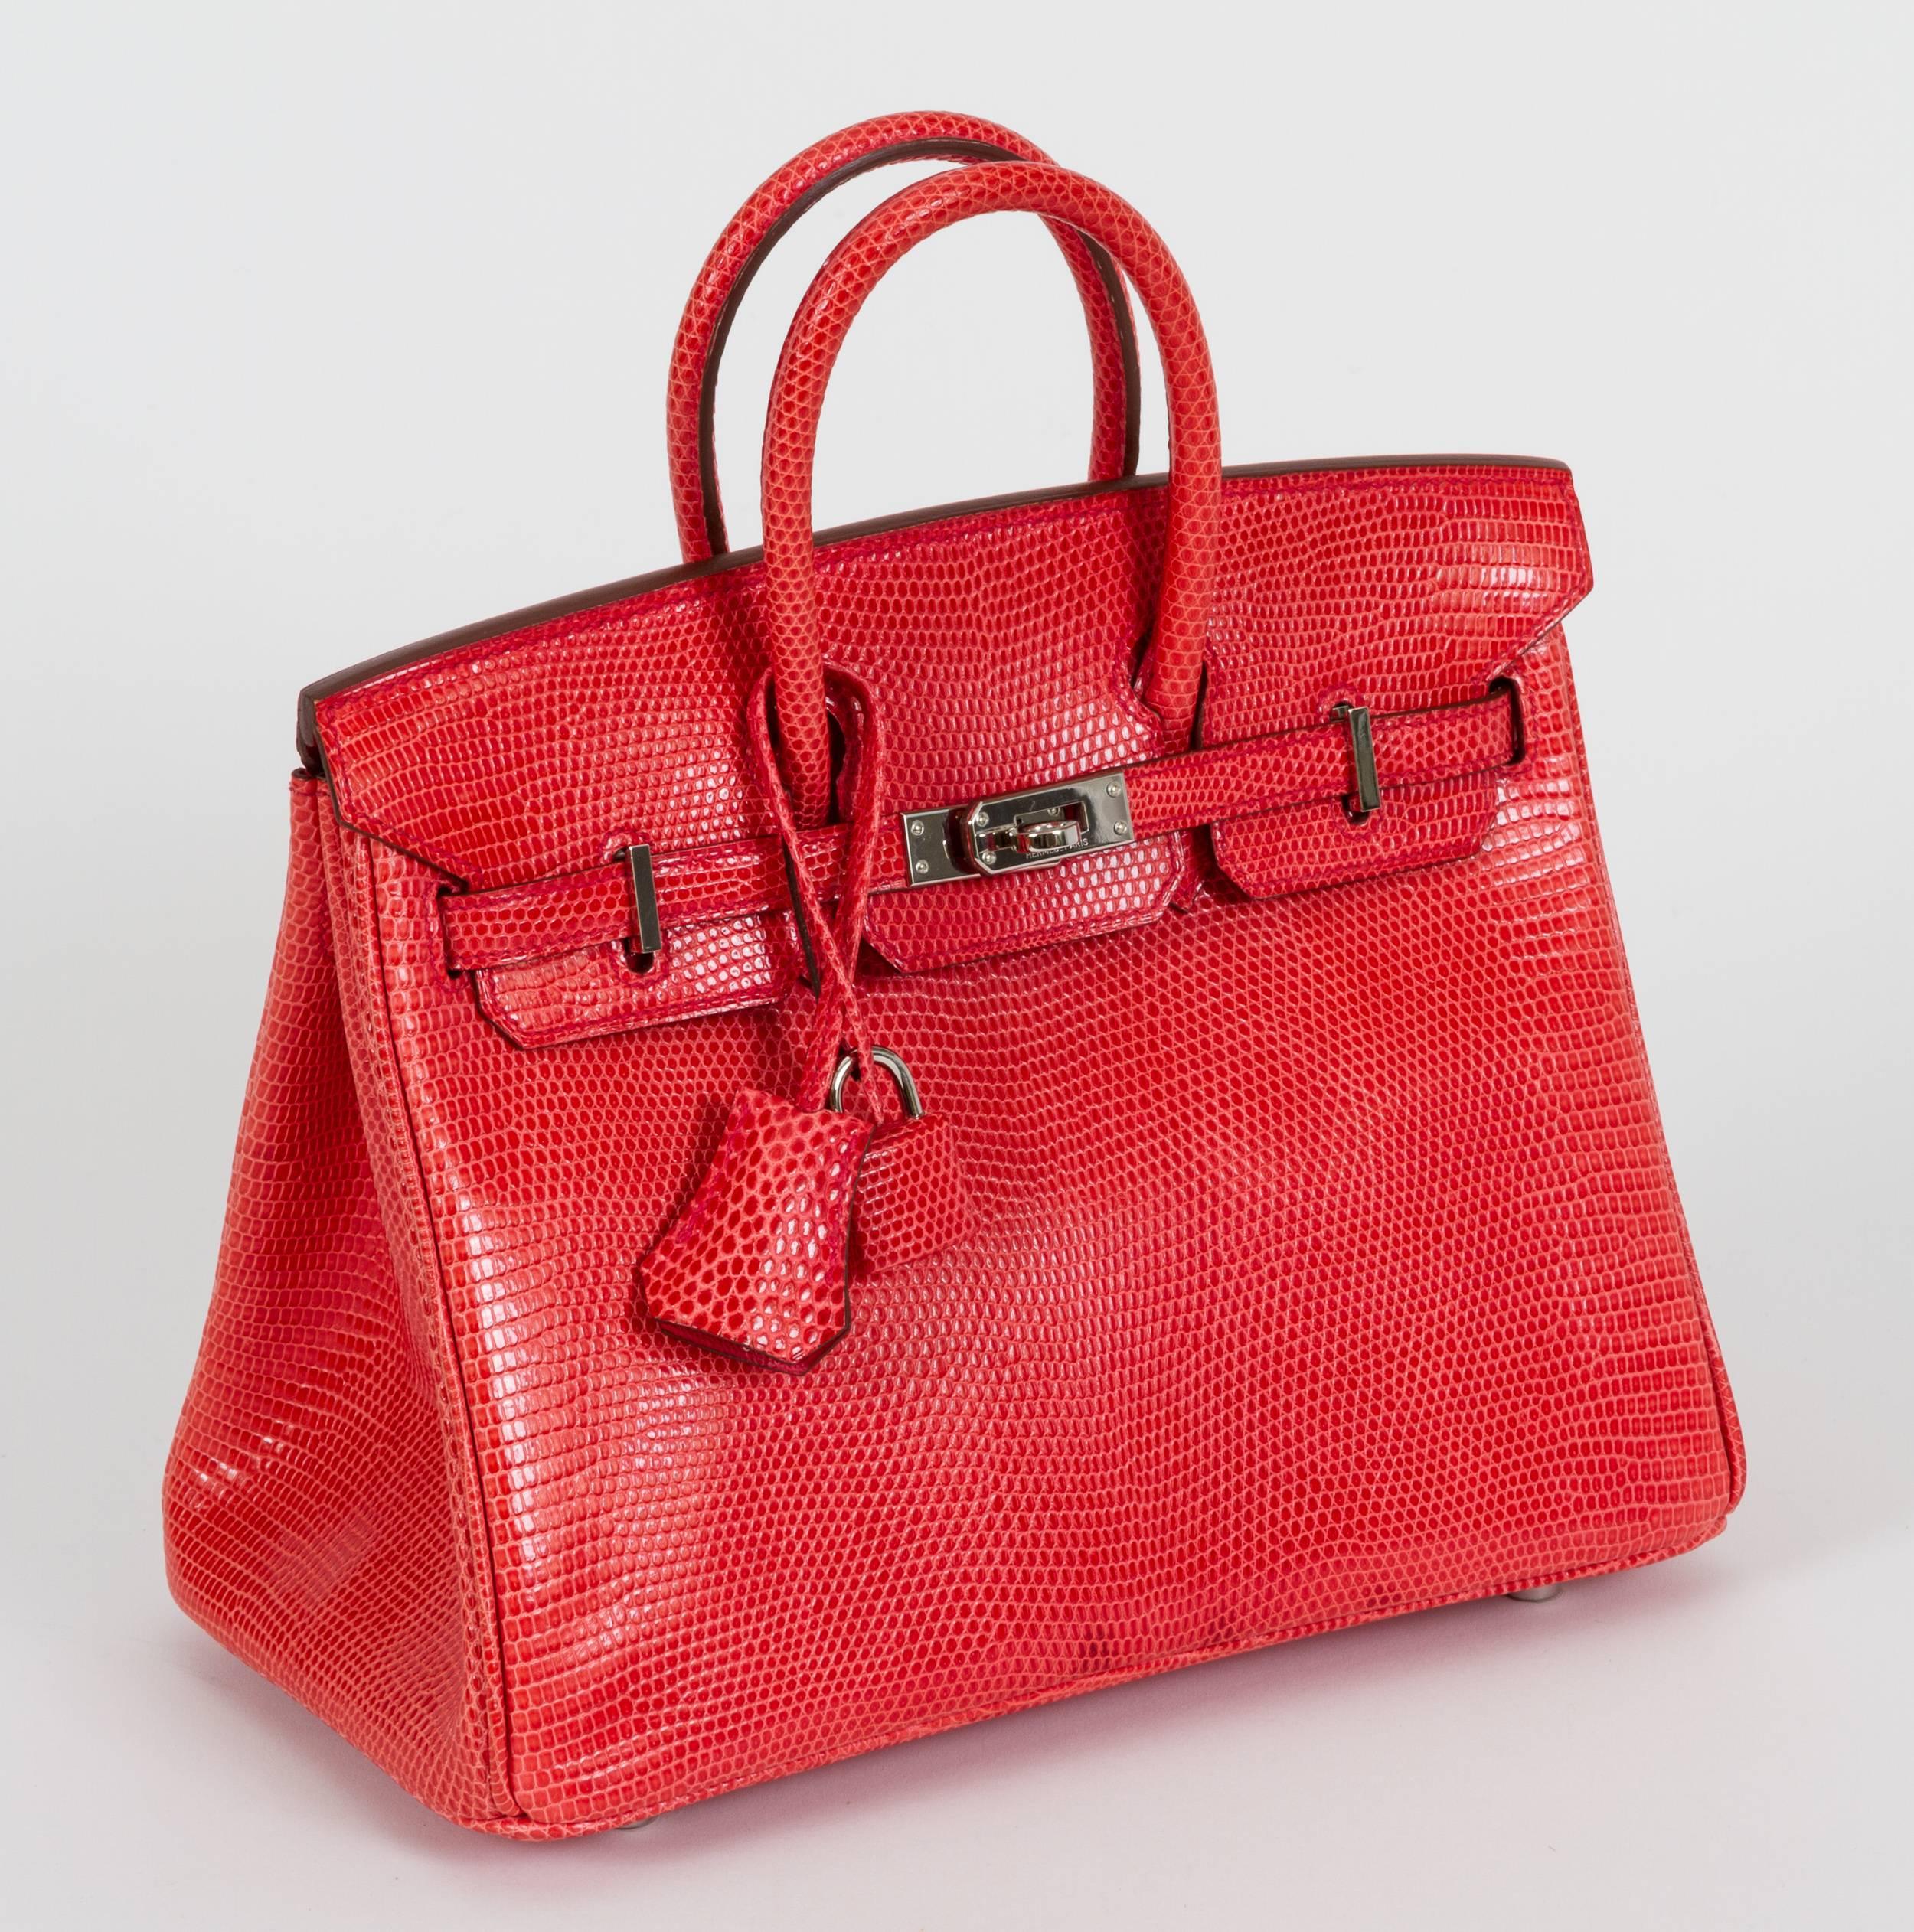 Hermès 25cm Birkin bag in rouge lizard leather and palladium hardware. Handle drop, 3